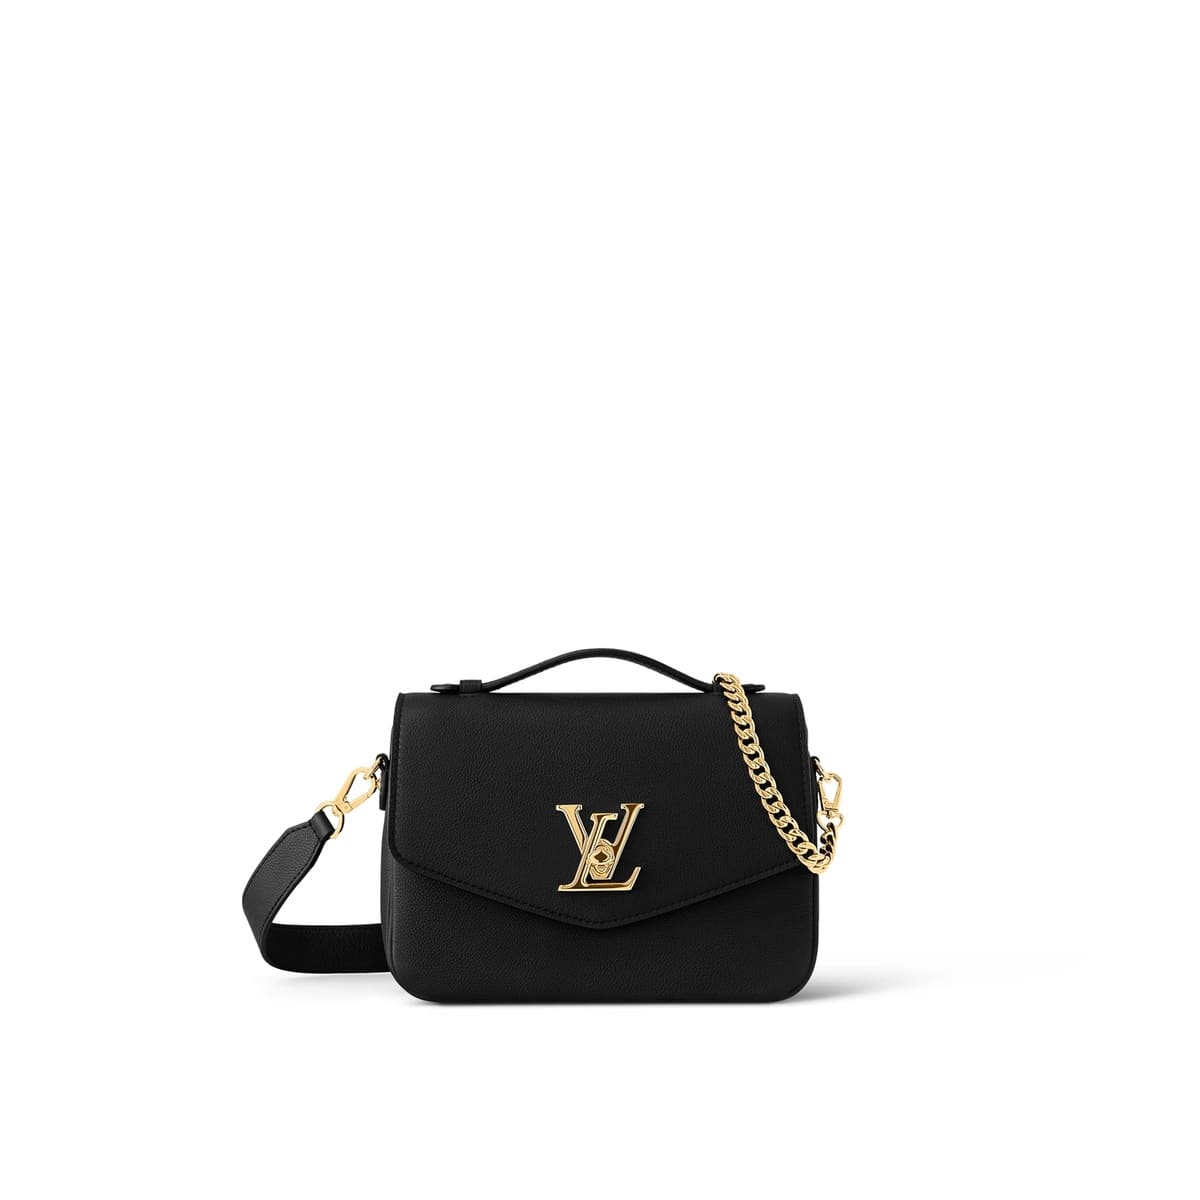 Louis Vuitton Square Bag, Bragmybag